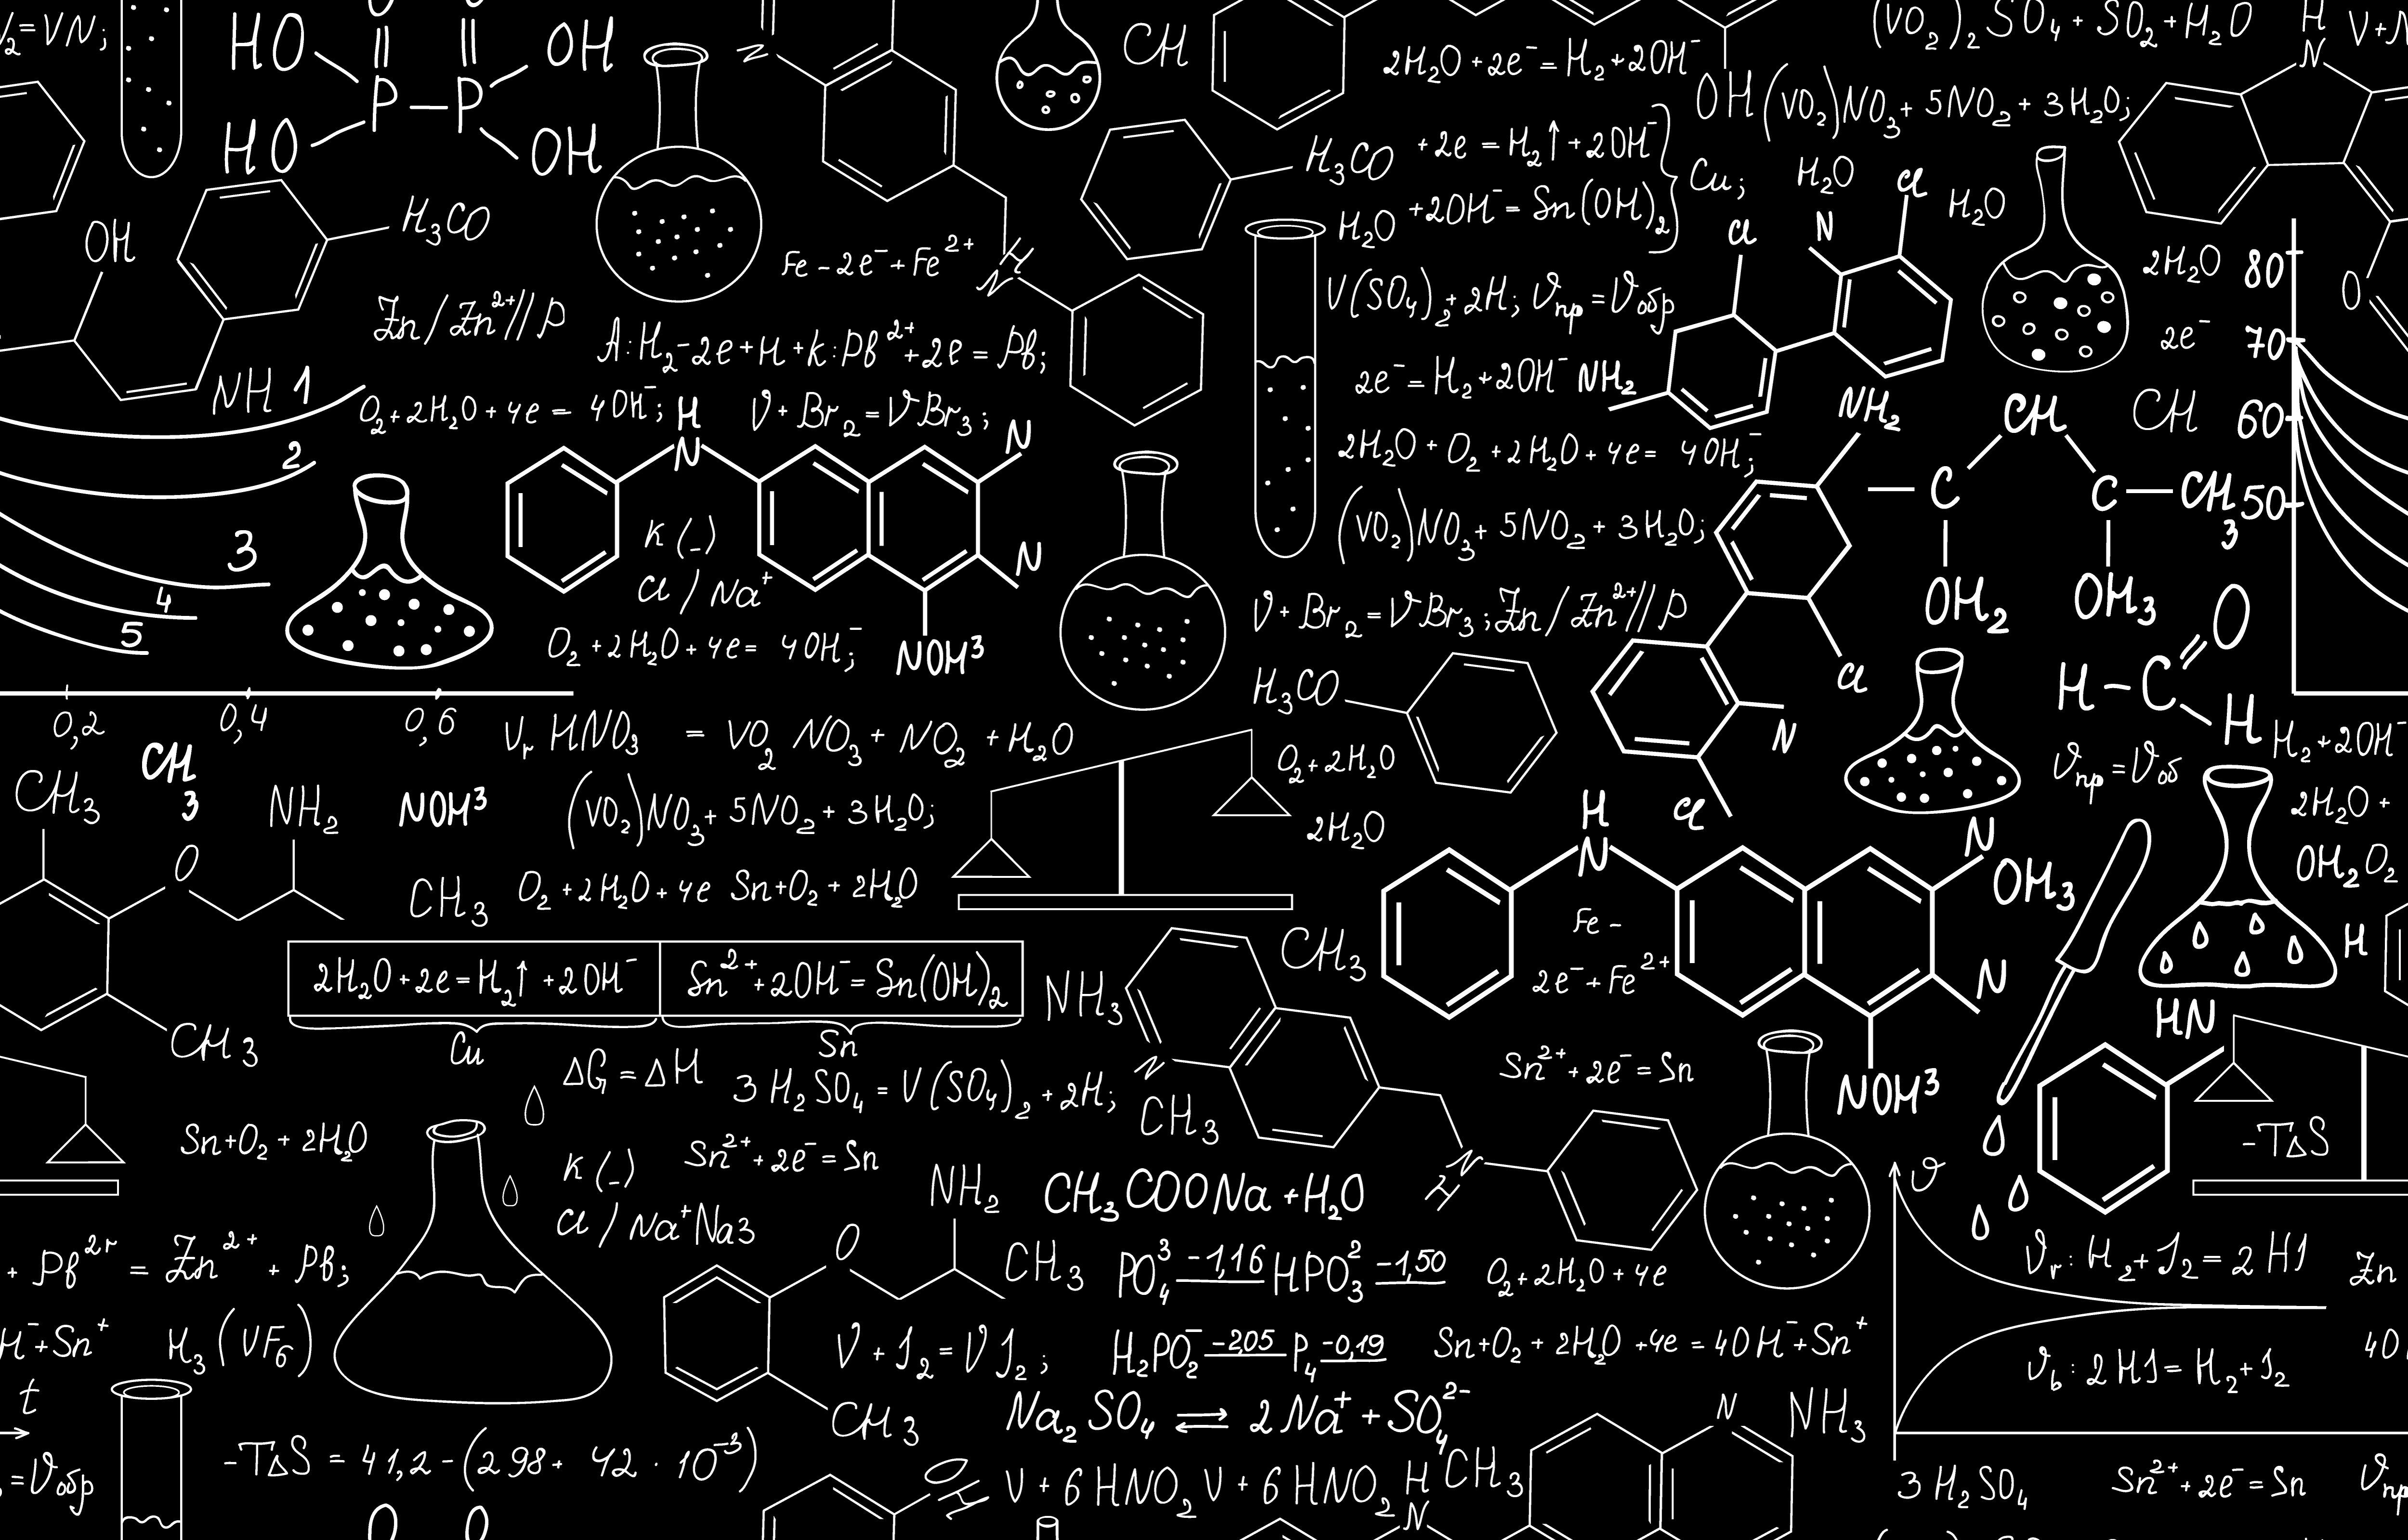 Motivational HD Wallpaper, chemistry, biology, detail